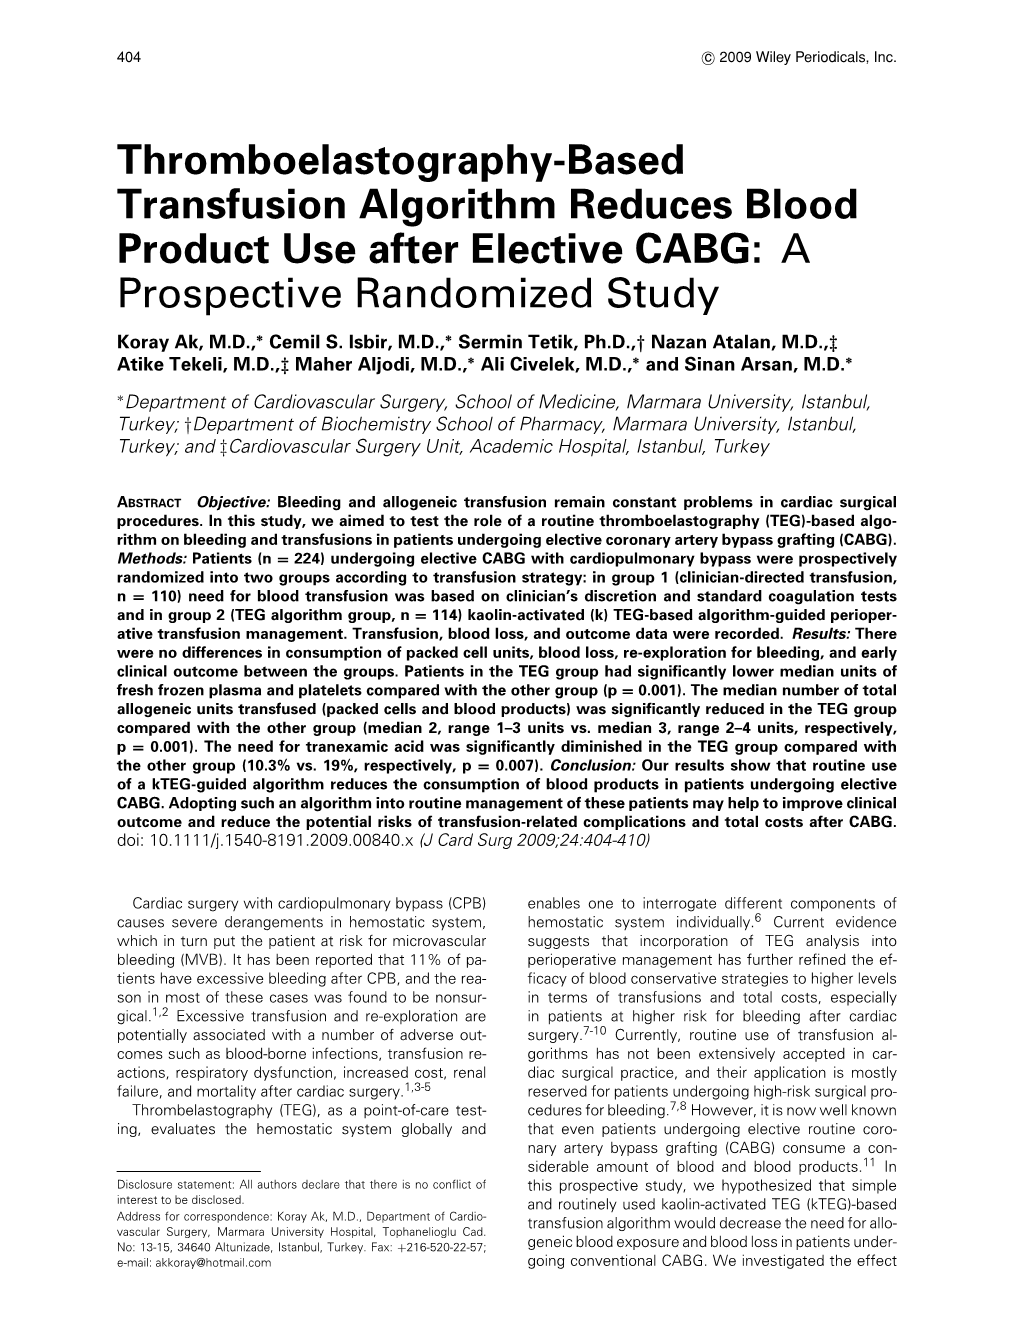 Thromboelastography-Based Transfusion Algorithm Reduces Blood Product Use After Elective CABG: a Prospective Randomized Study Koray Ak, M.D.,∗ Cemil S